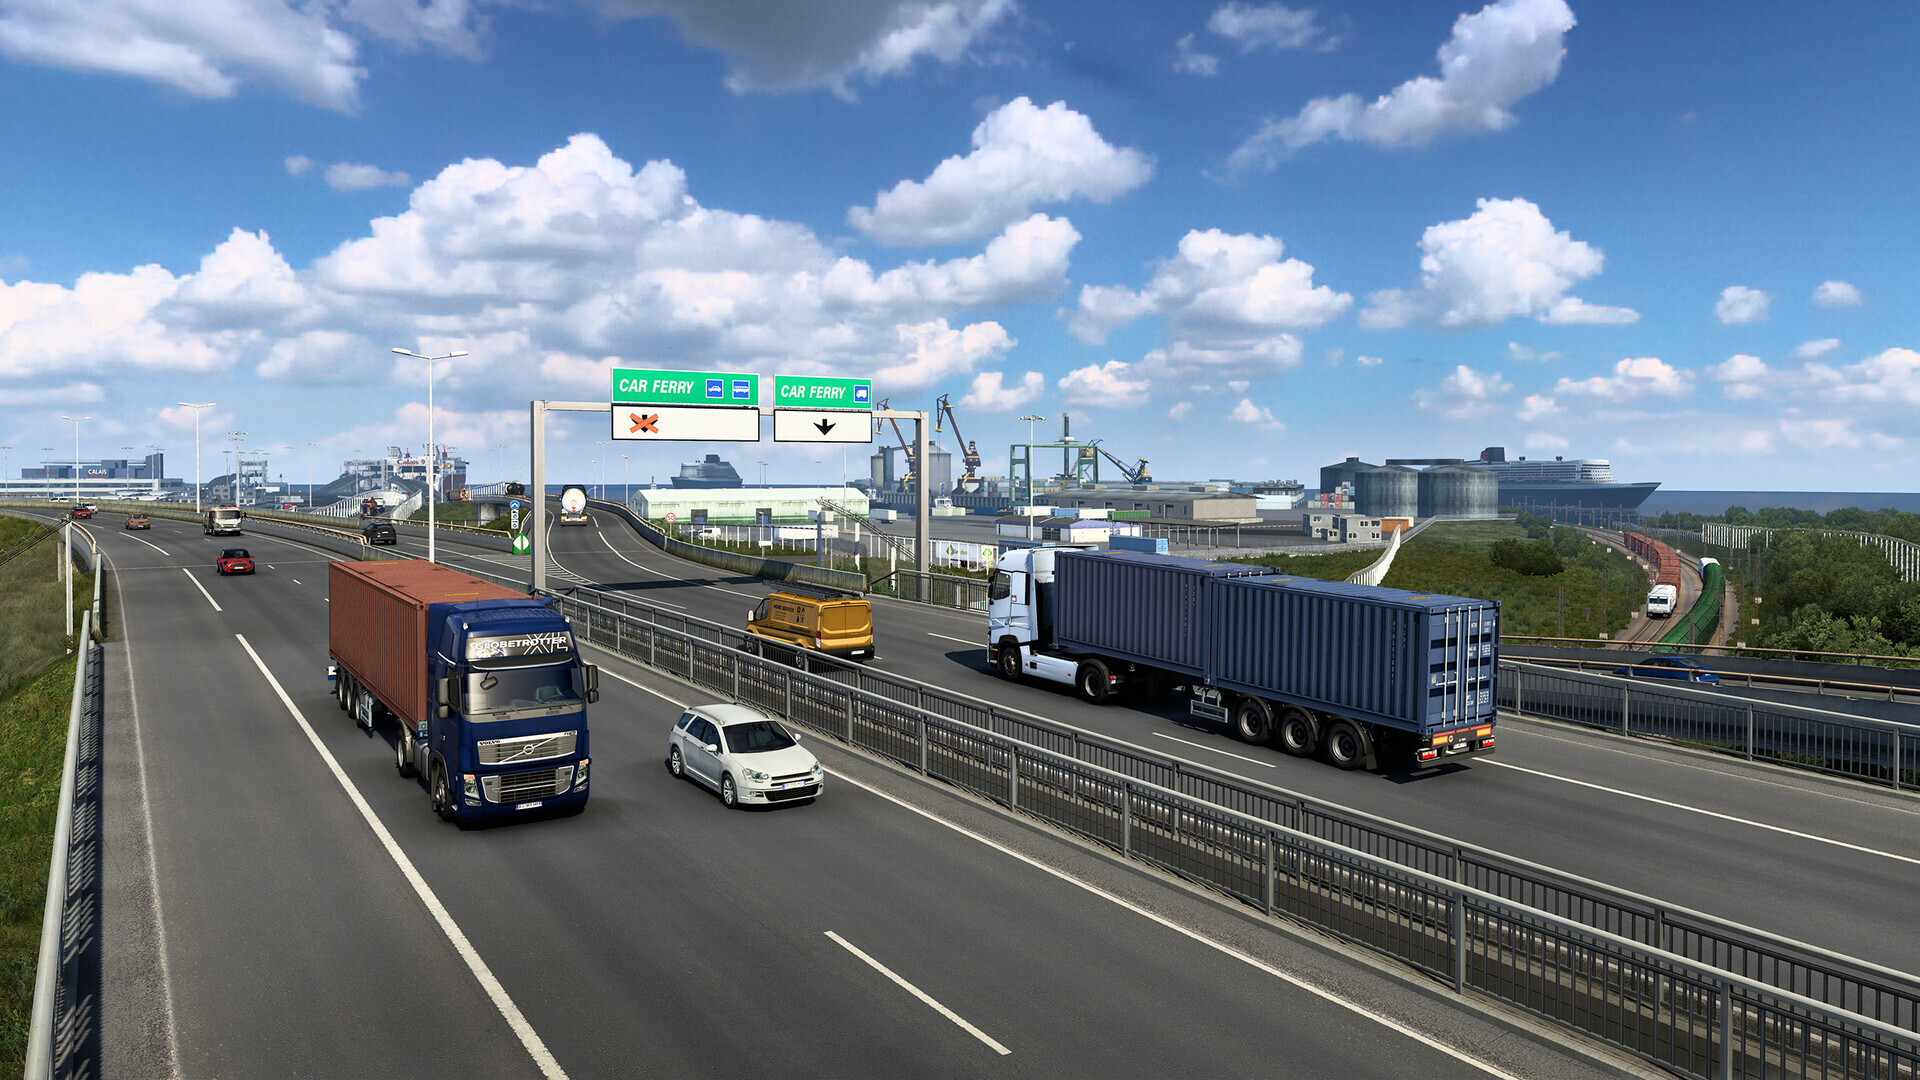 Euro Truck Simulator 2 - Italia (DLC) Steam Key GLOBAL